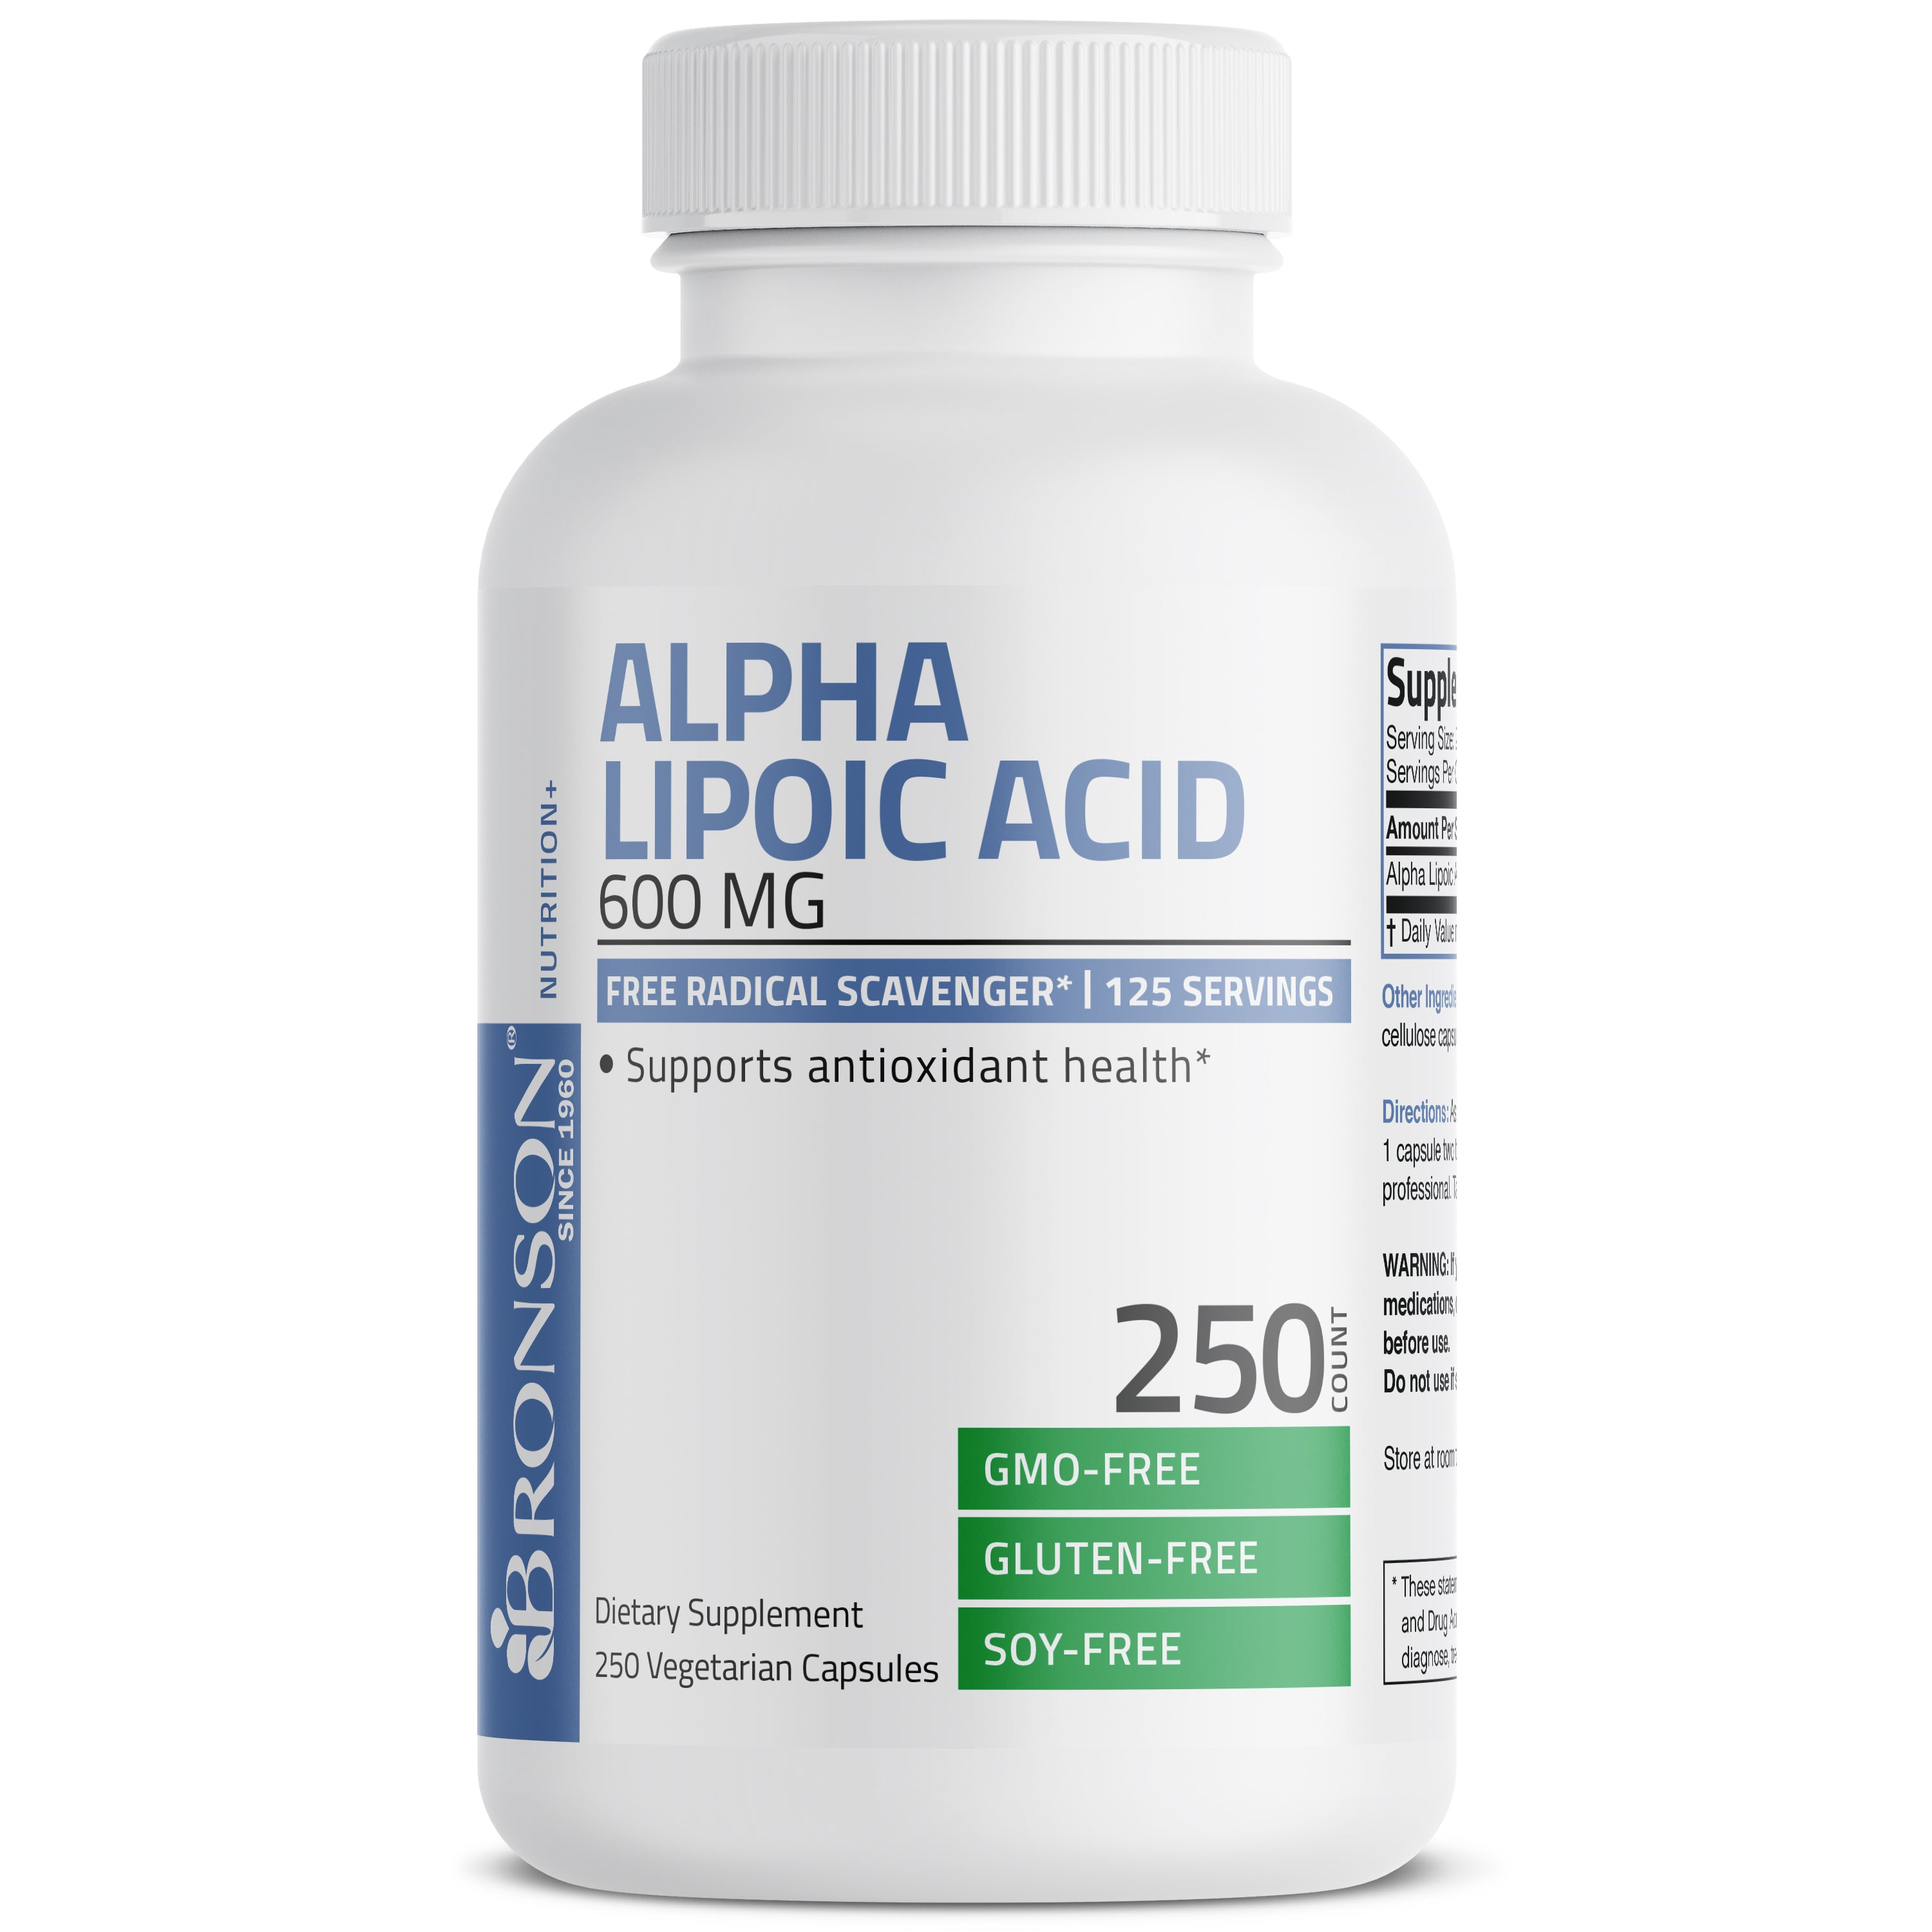 Alpha Lipoic Acid 600 MG view 11 of 14